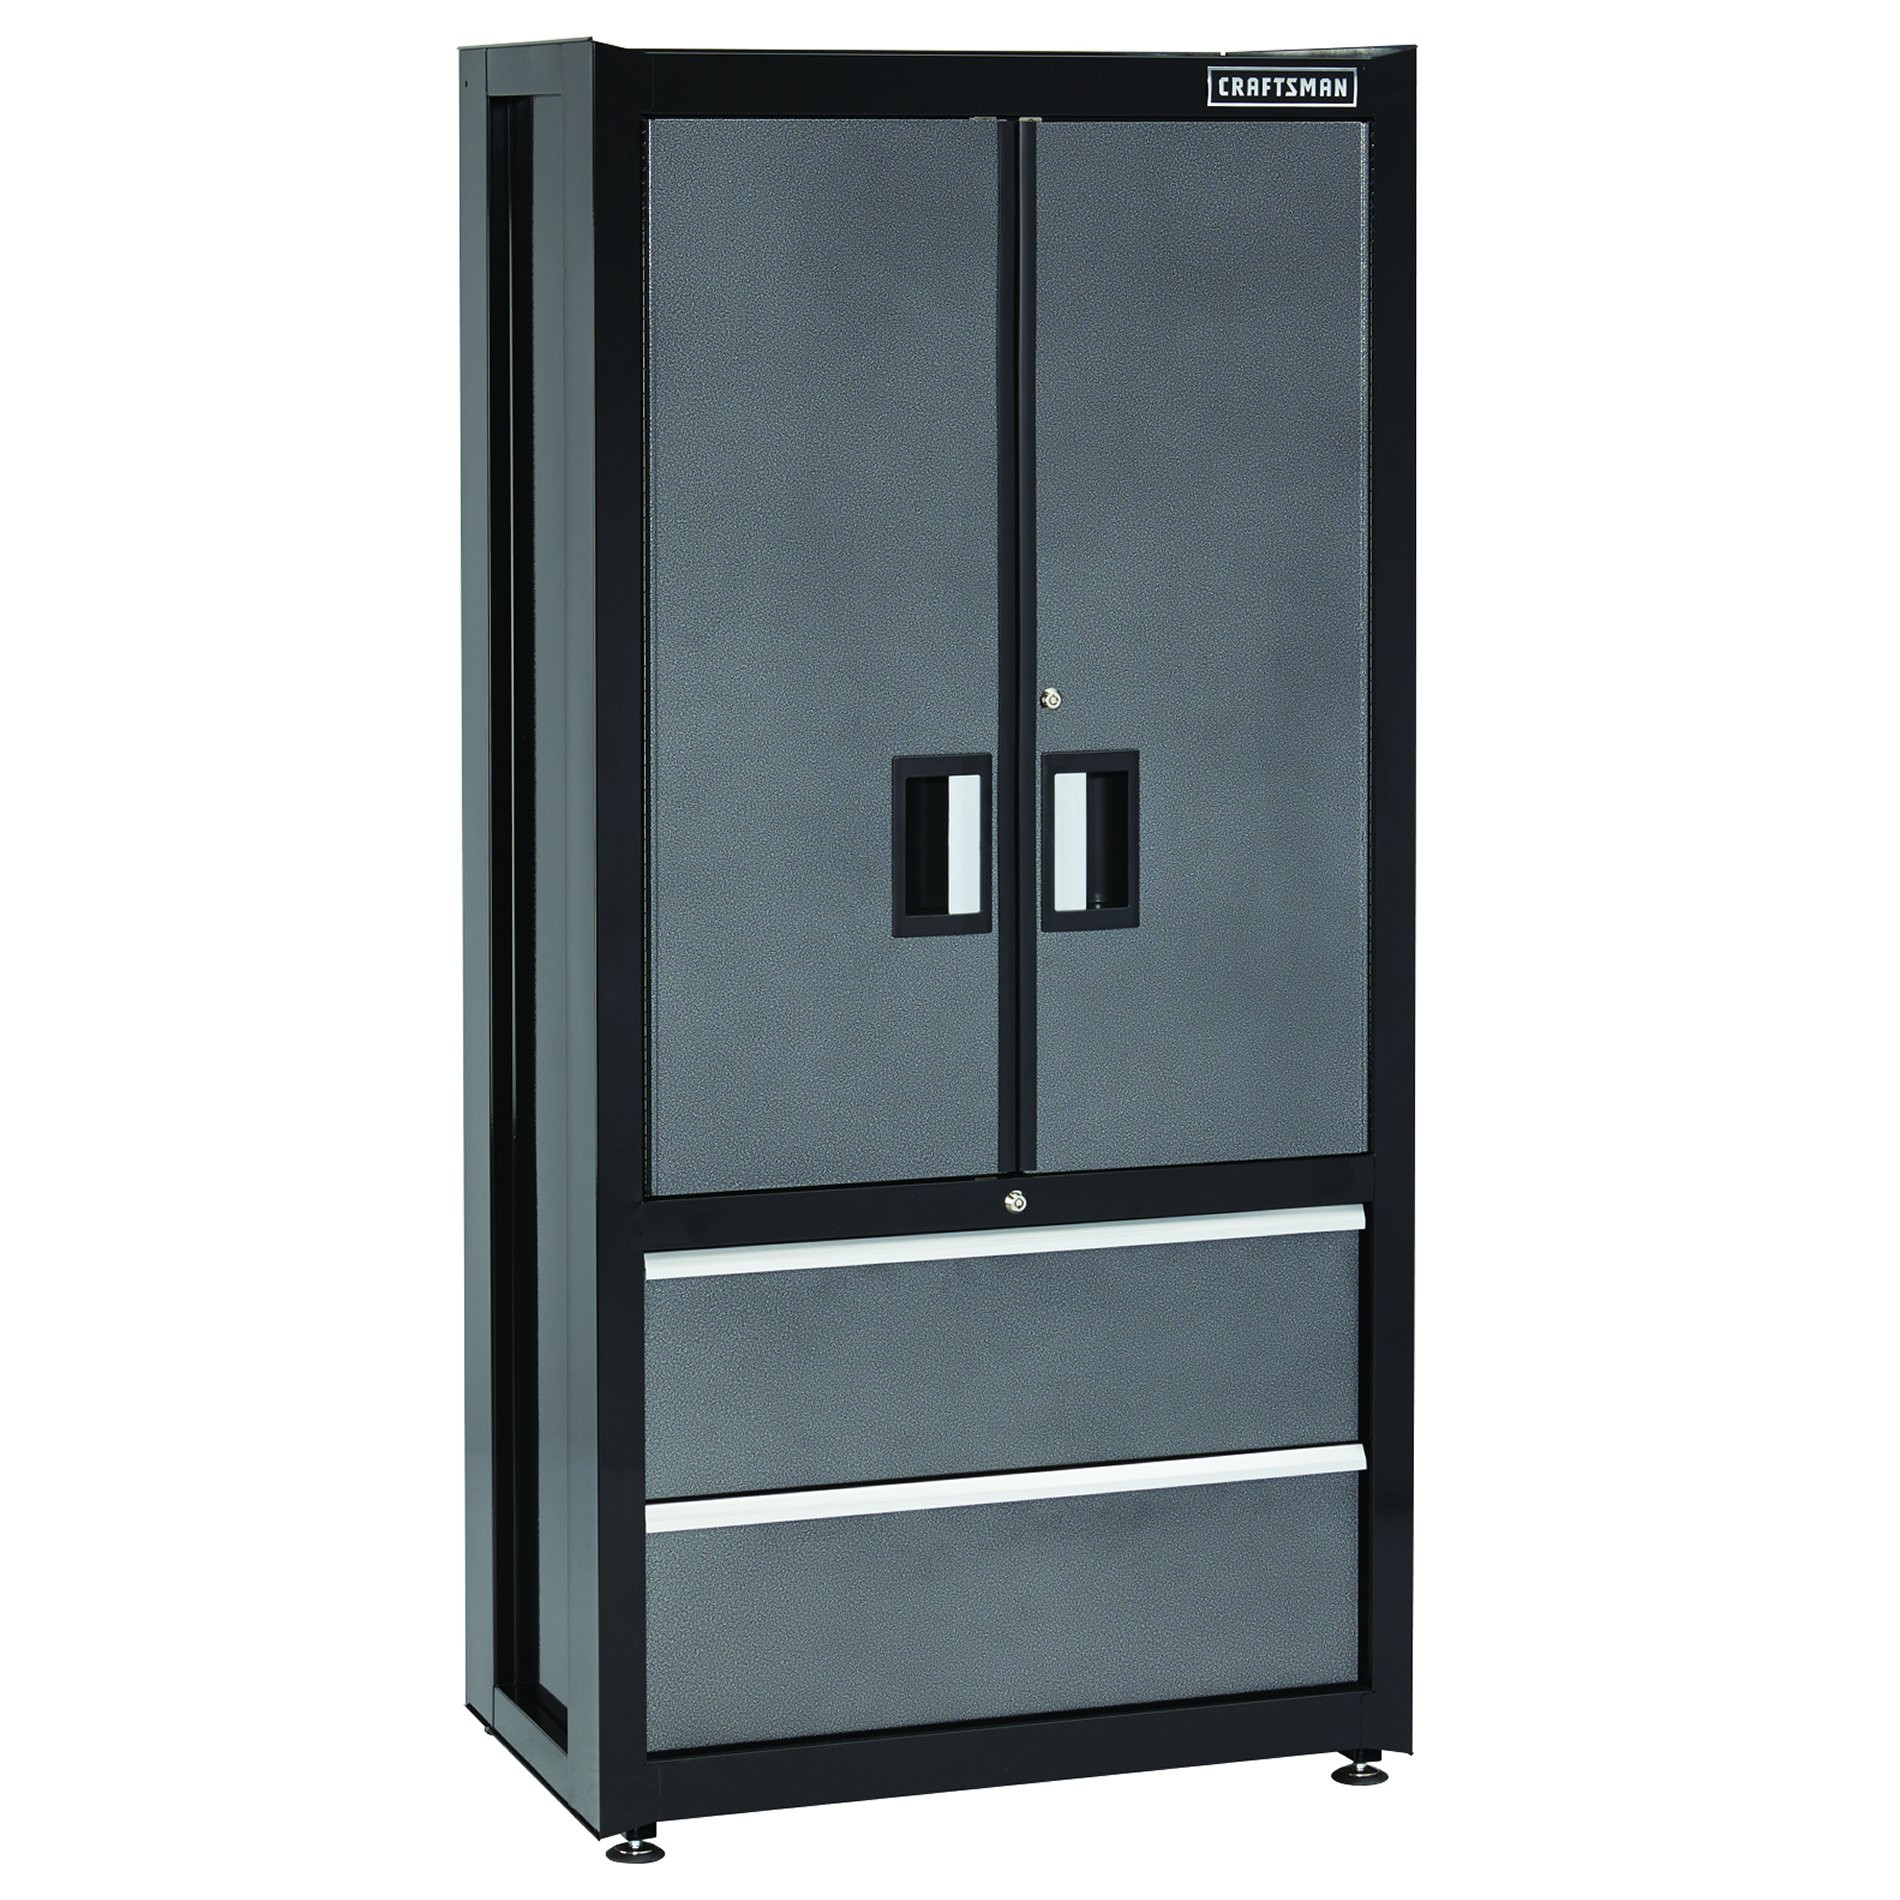 Best ideas about Sears Garage Storage Cabinets
. Save or Pin Craftsman Premium Heavy Duty Floor Cabinet Trio Now.